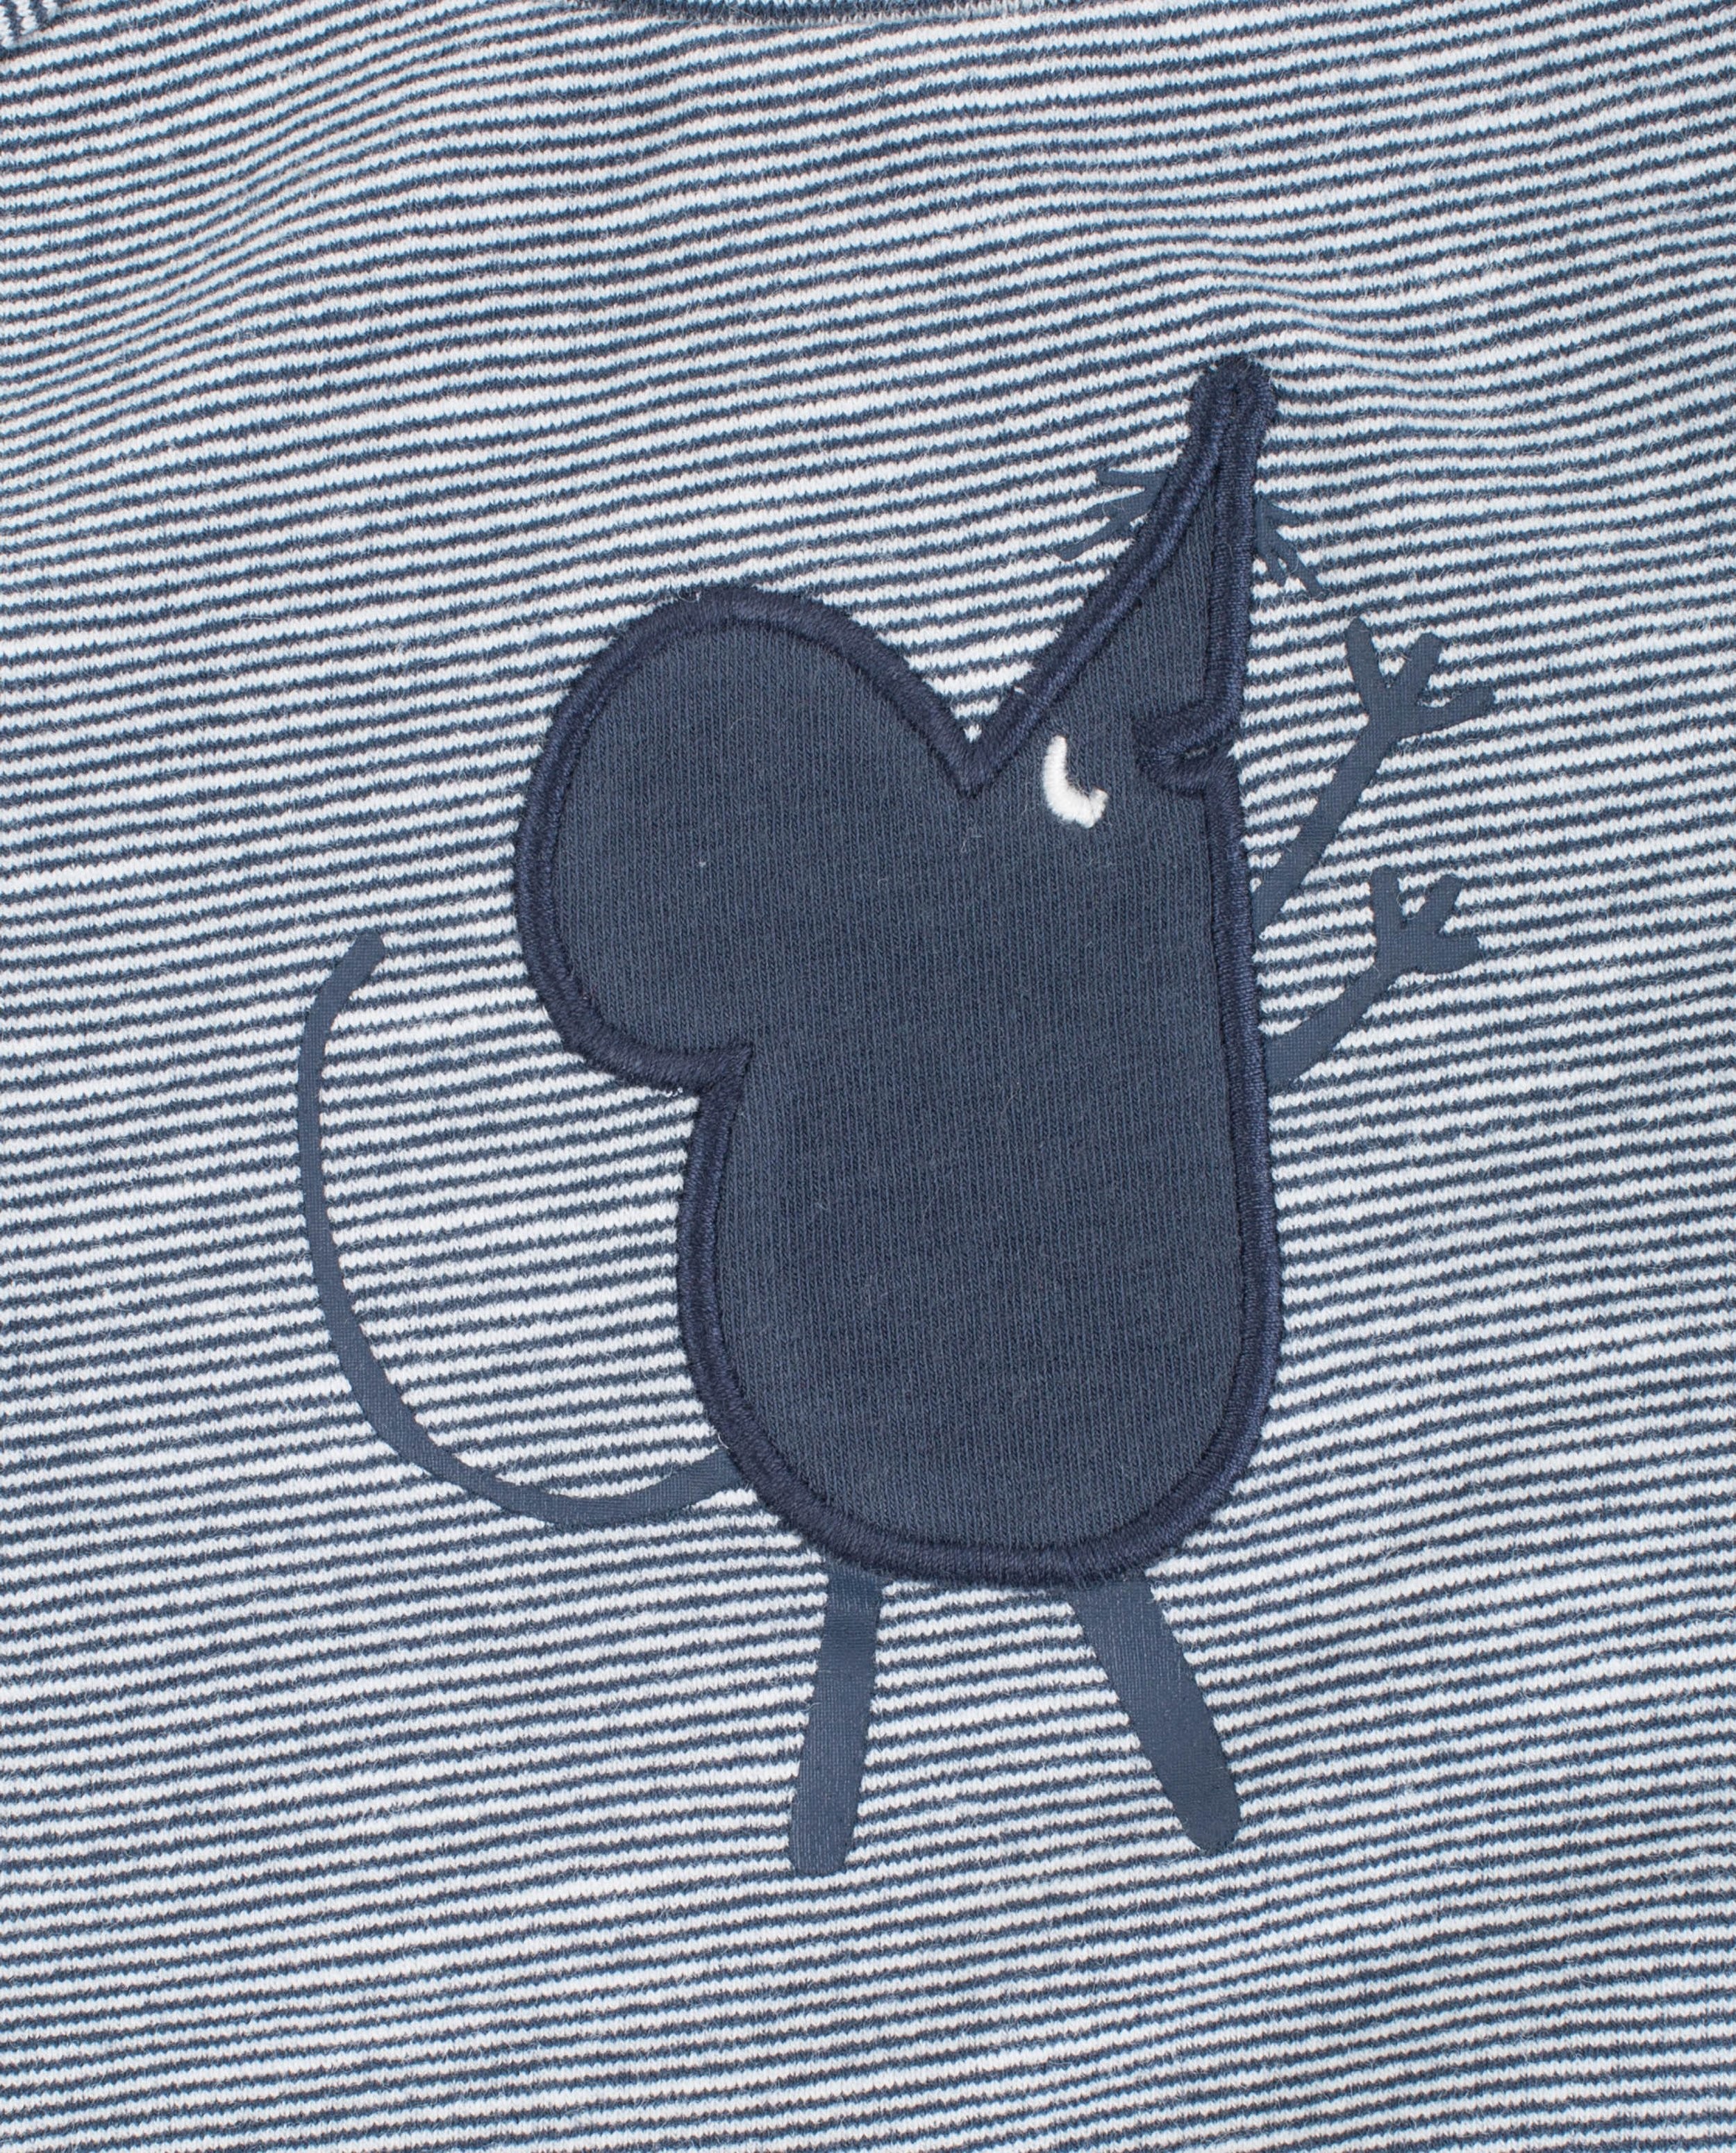 Sweaters - Donkerblauwe trui met muizenprint